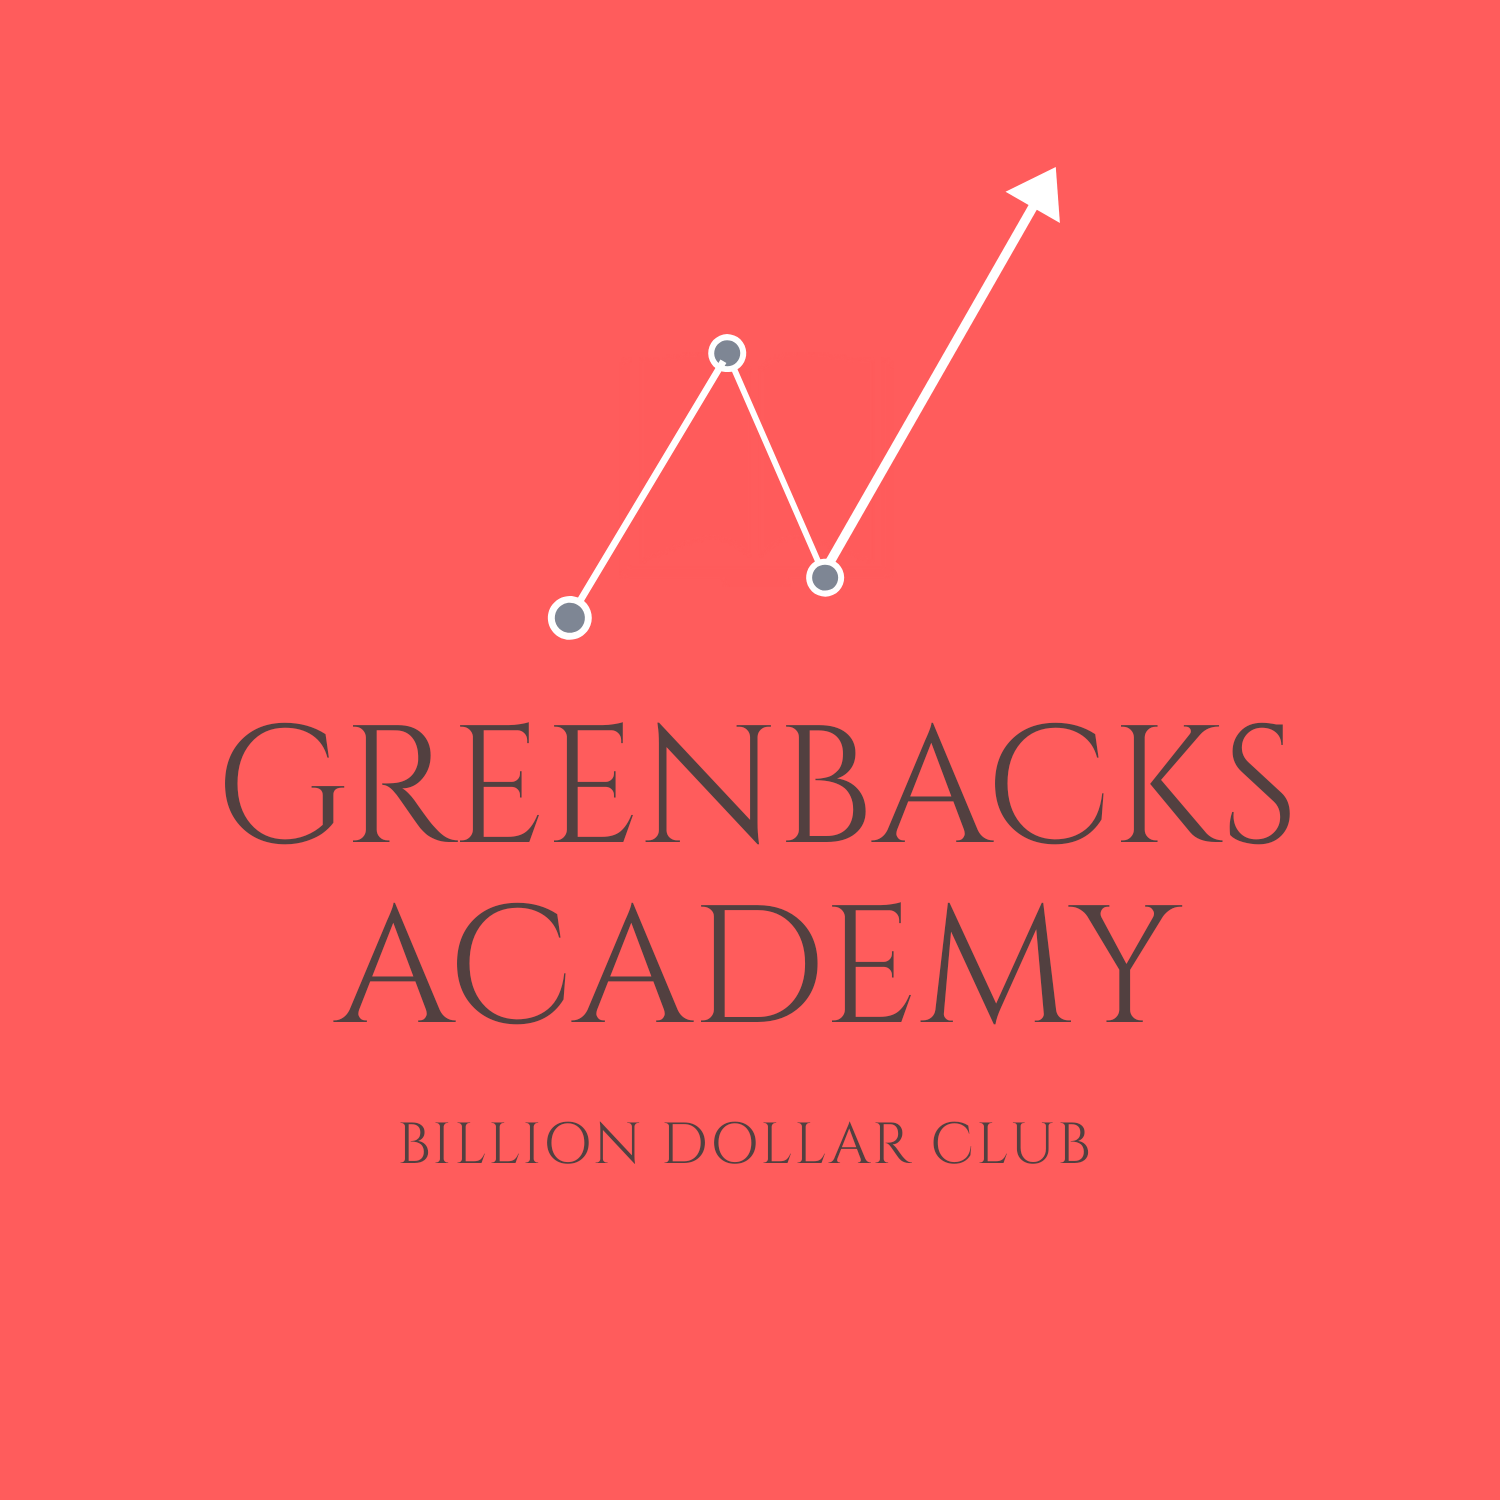 Greenbacks Academy anyservice service provider